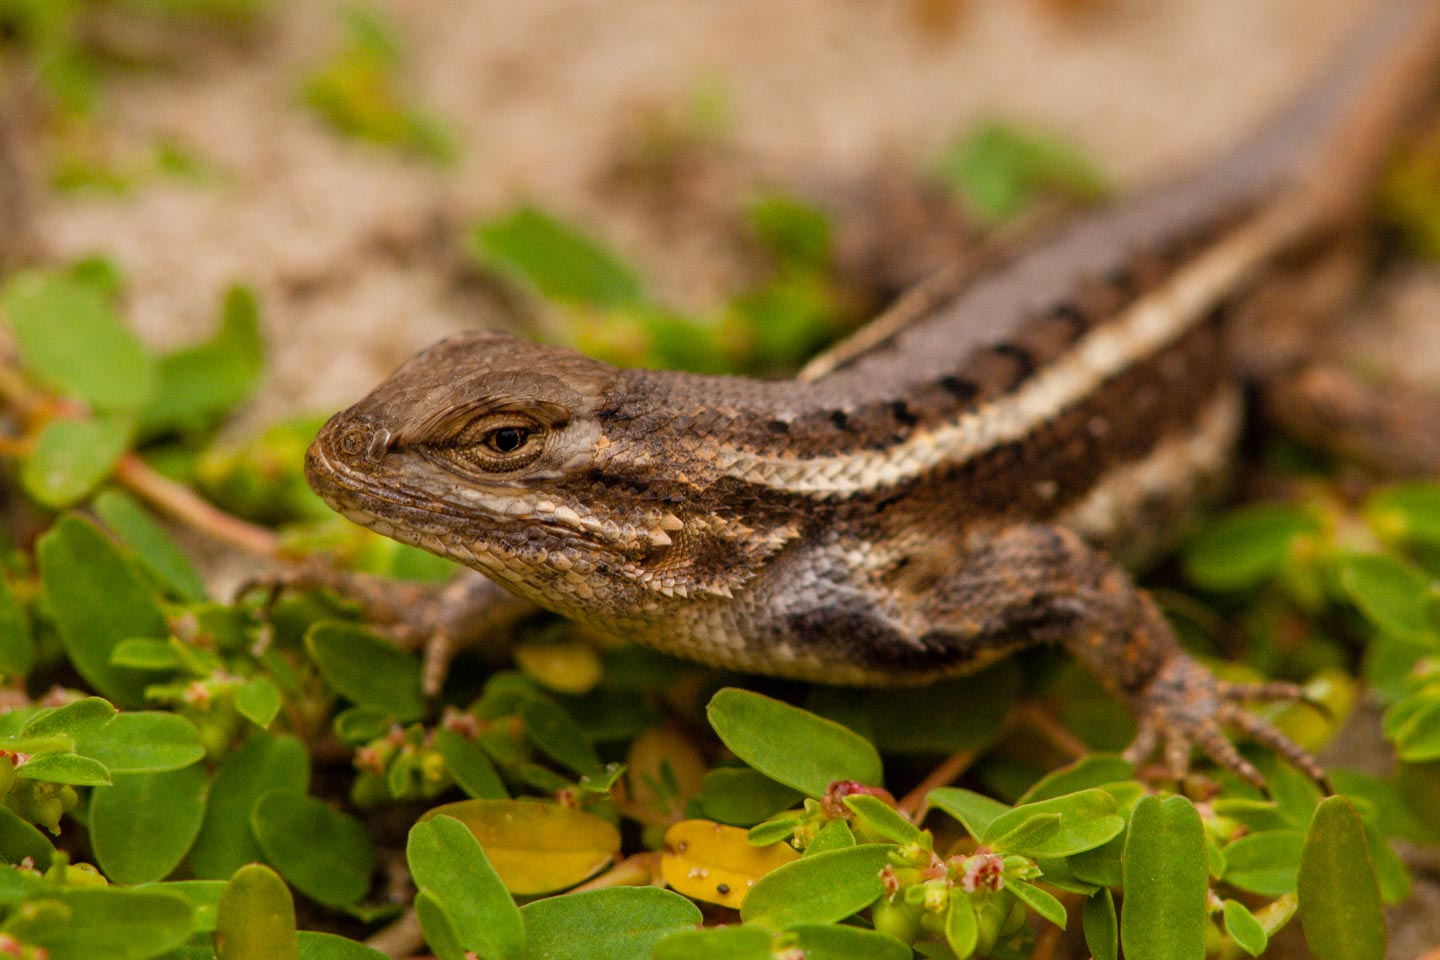 Read More: Lizards of Nebraska